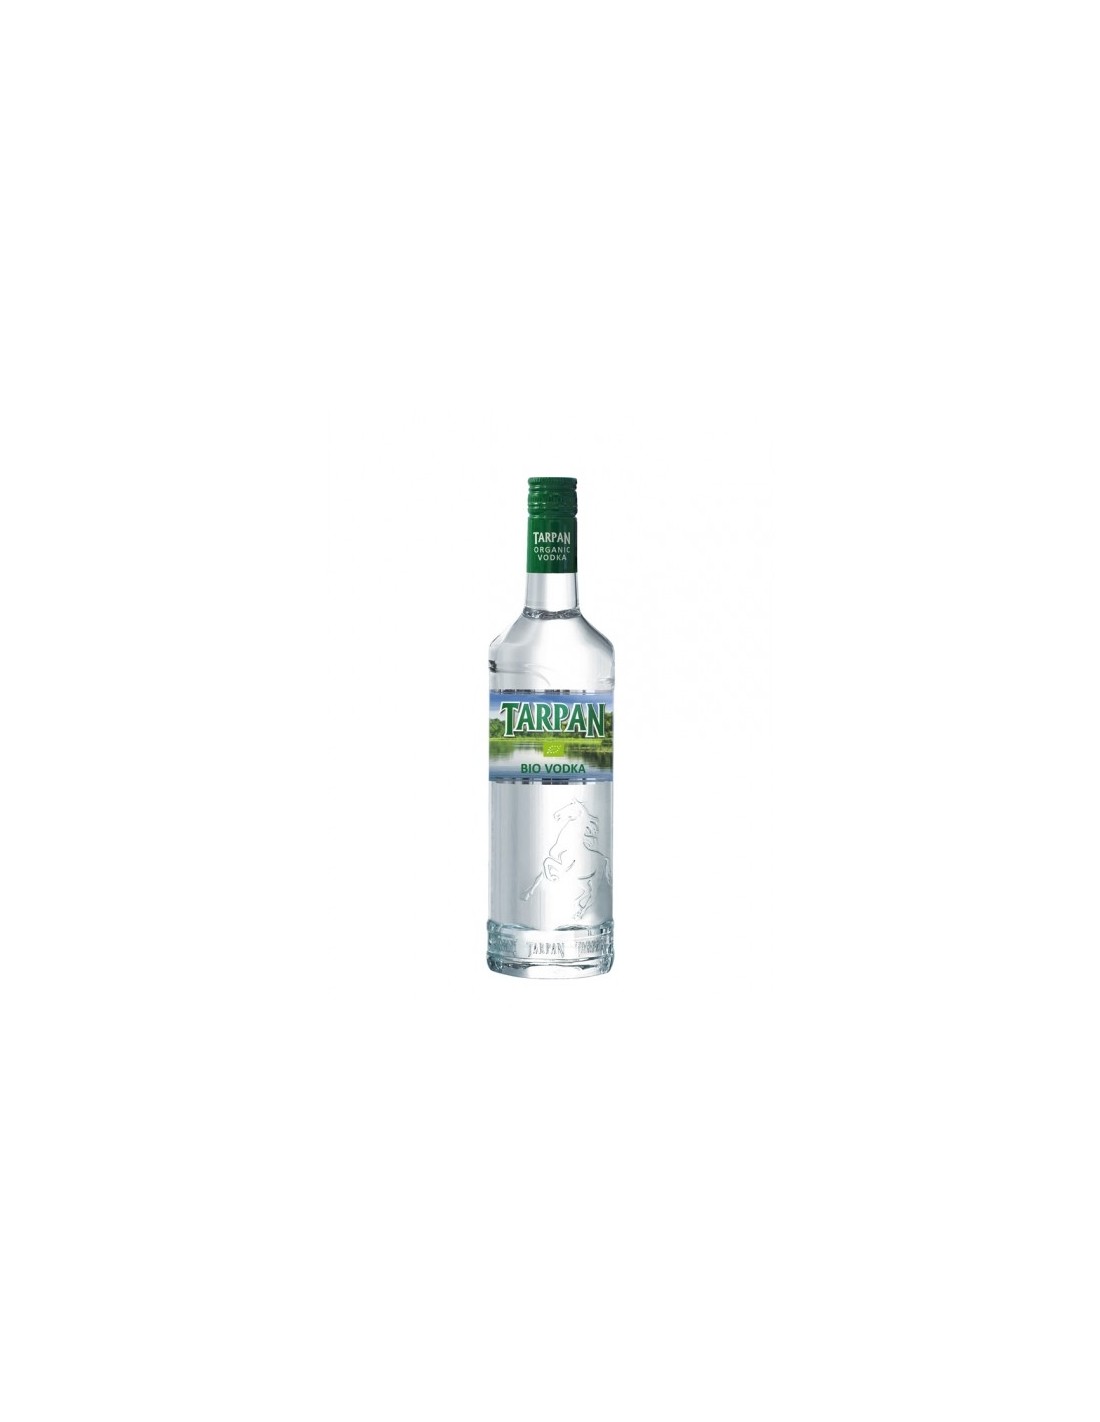 Vodca bio Tarpan Organic, 0.7L, 40% alc., Germania alcooldiscount.ro